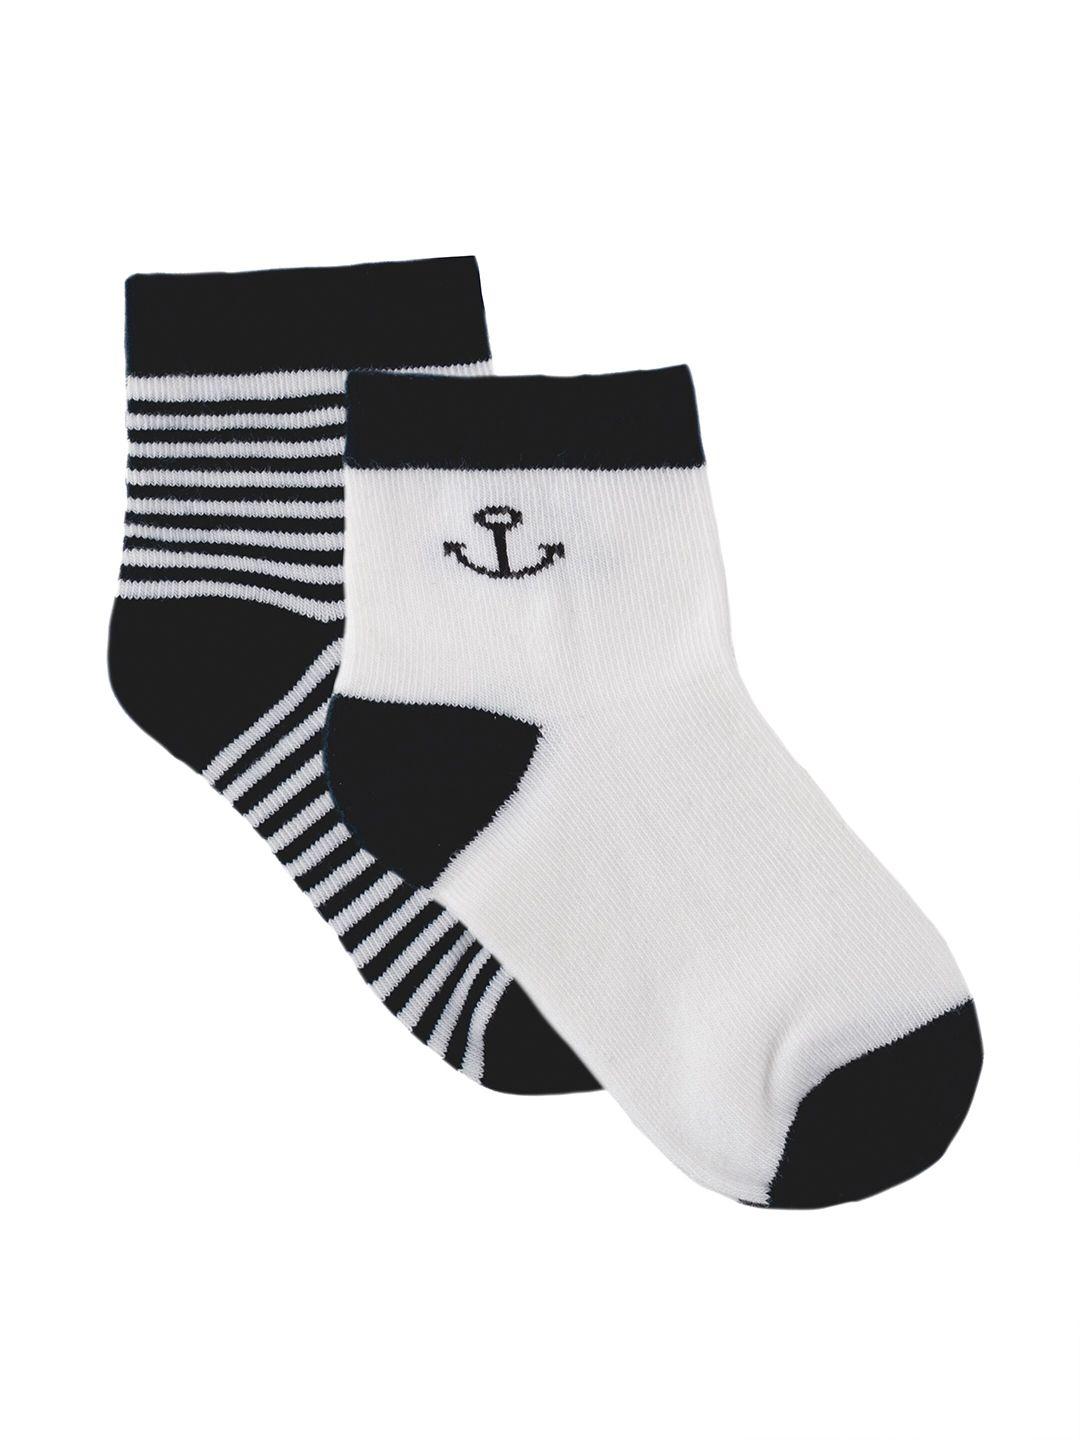 nuluv-boys-pack-of-2-assorted-ankle-length-socks